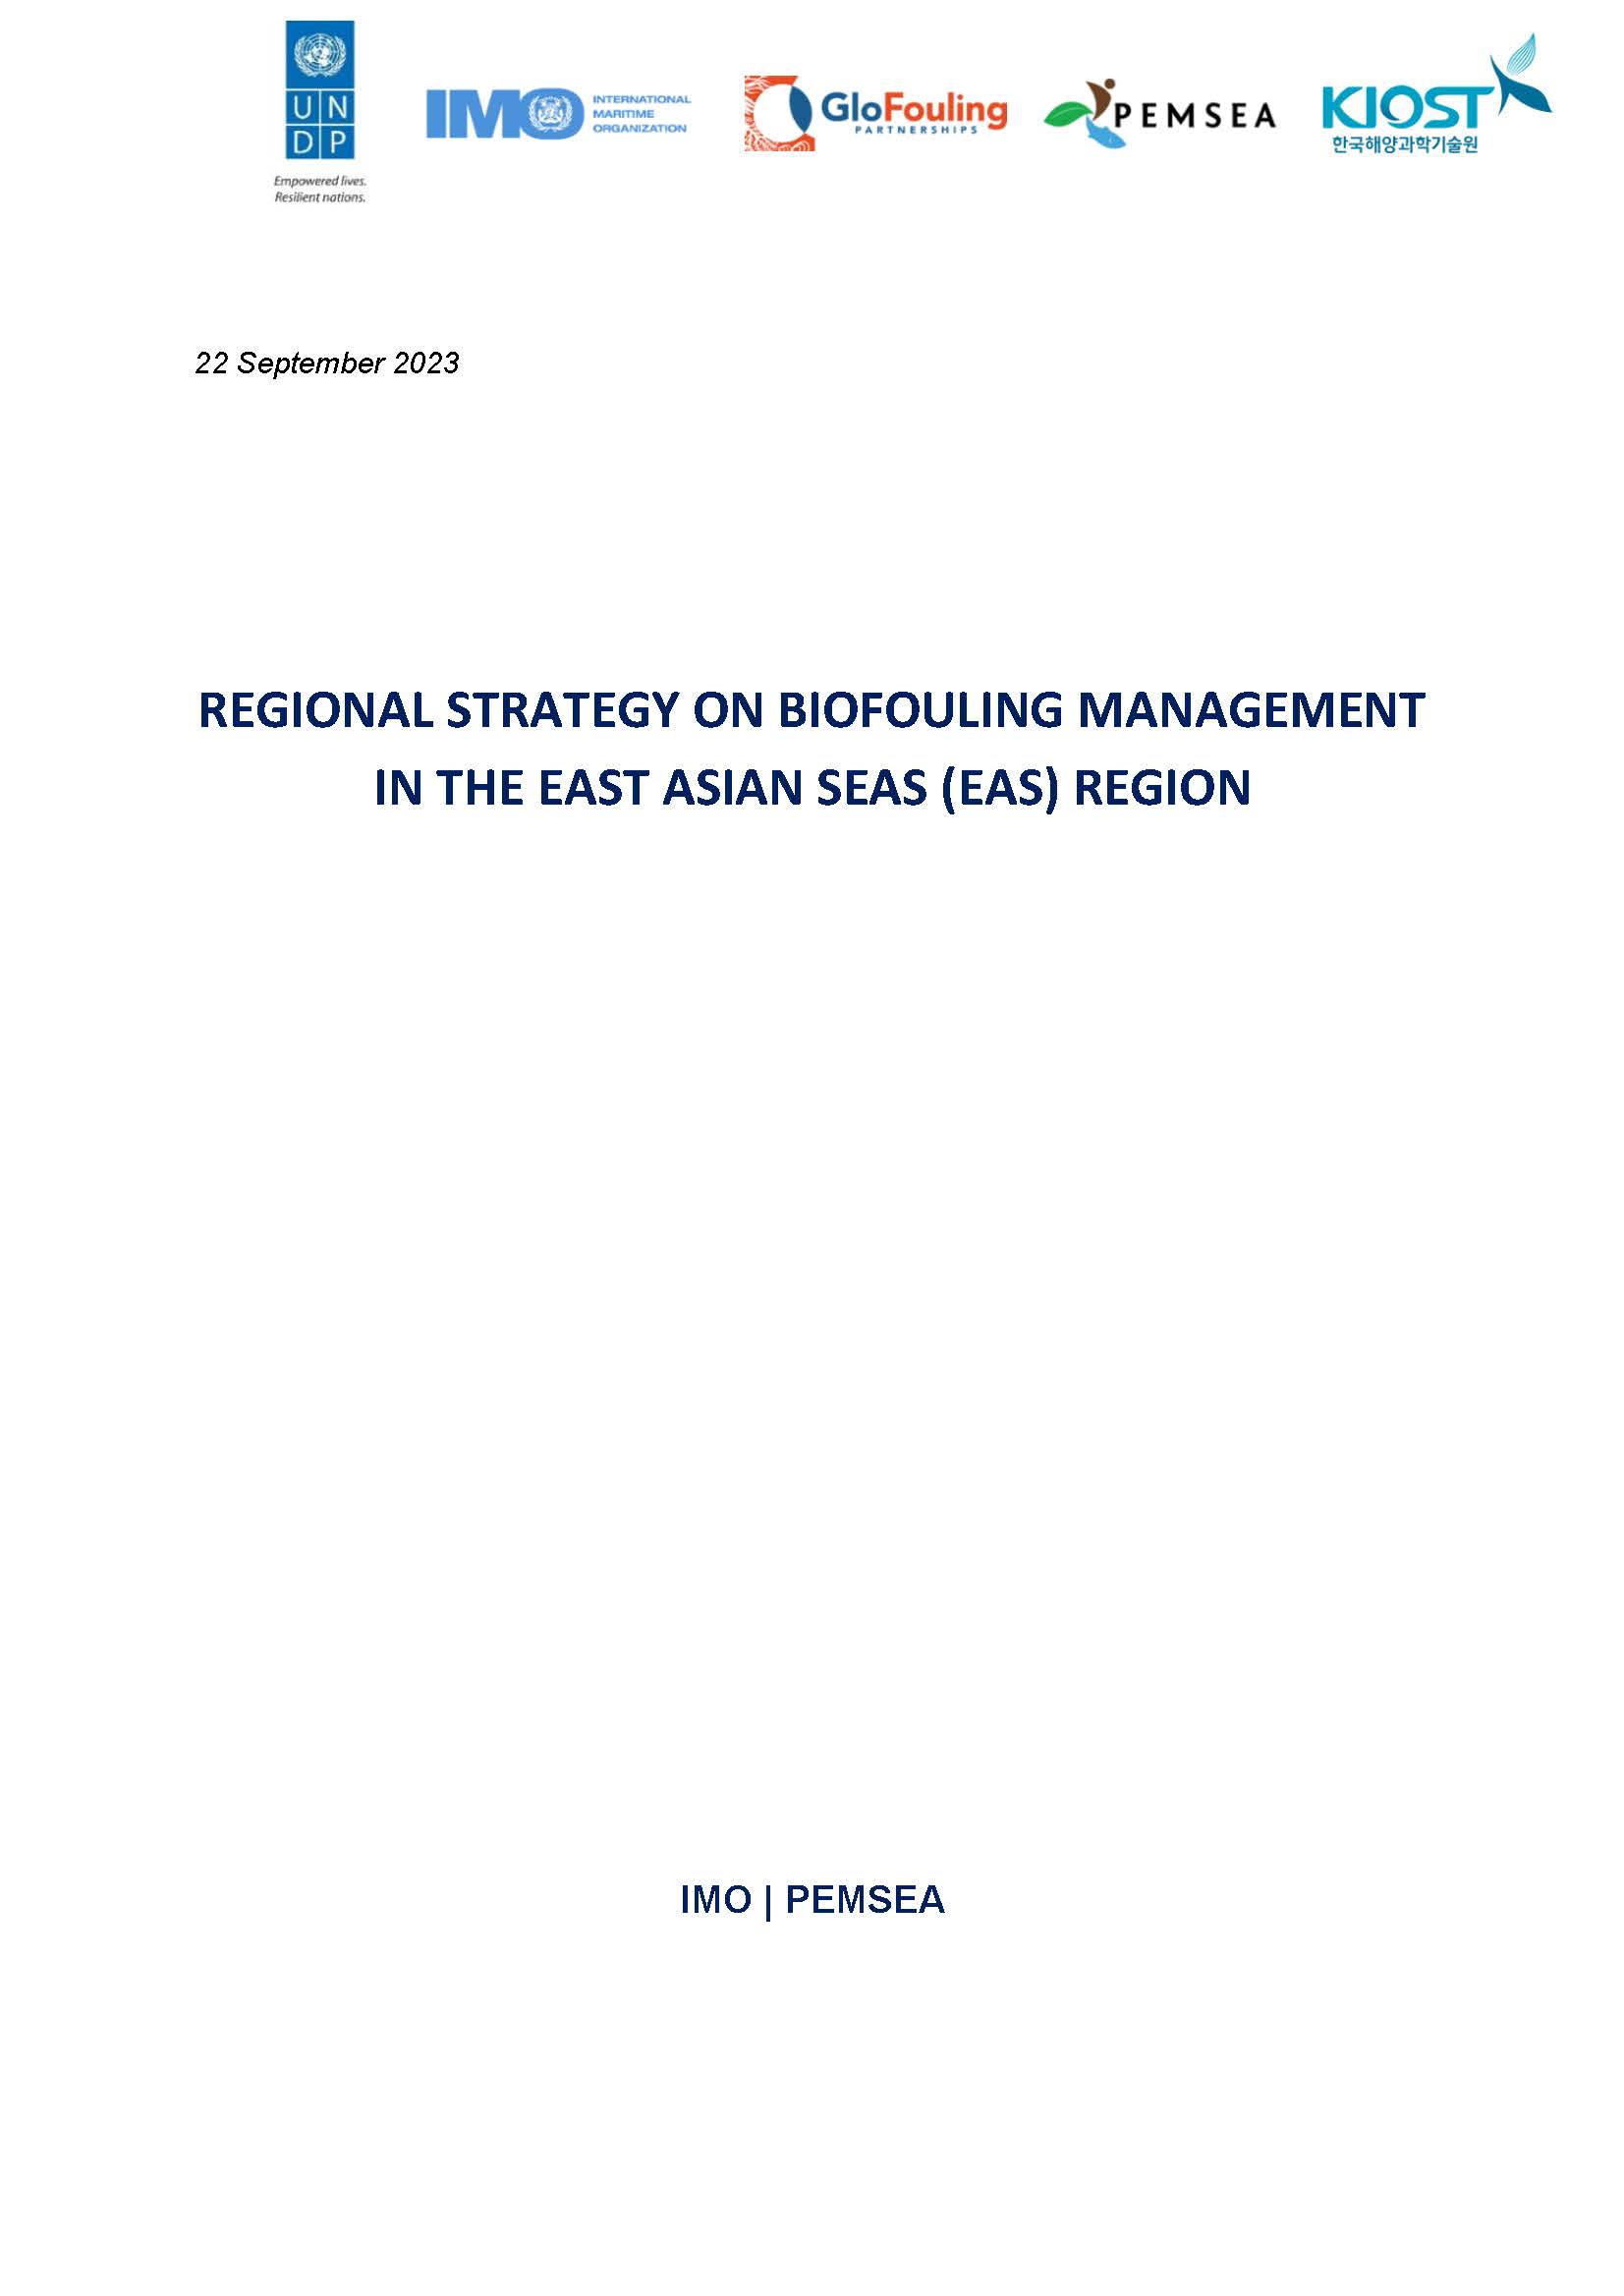 Regional Strategy Biofouling EAS Region